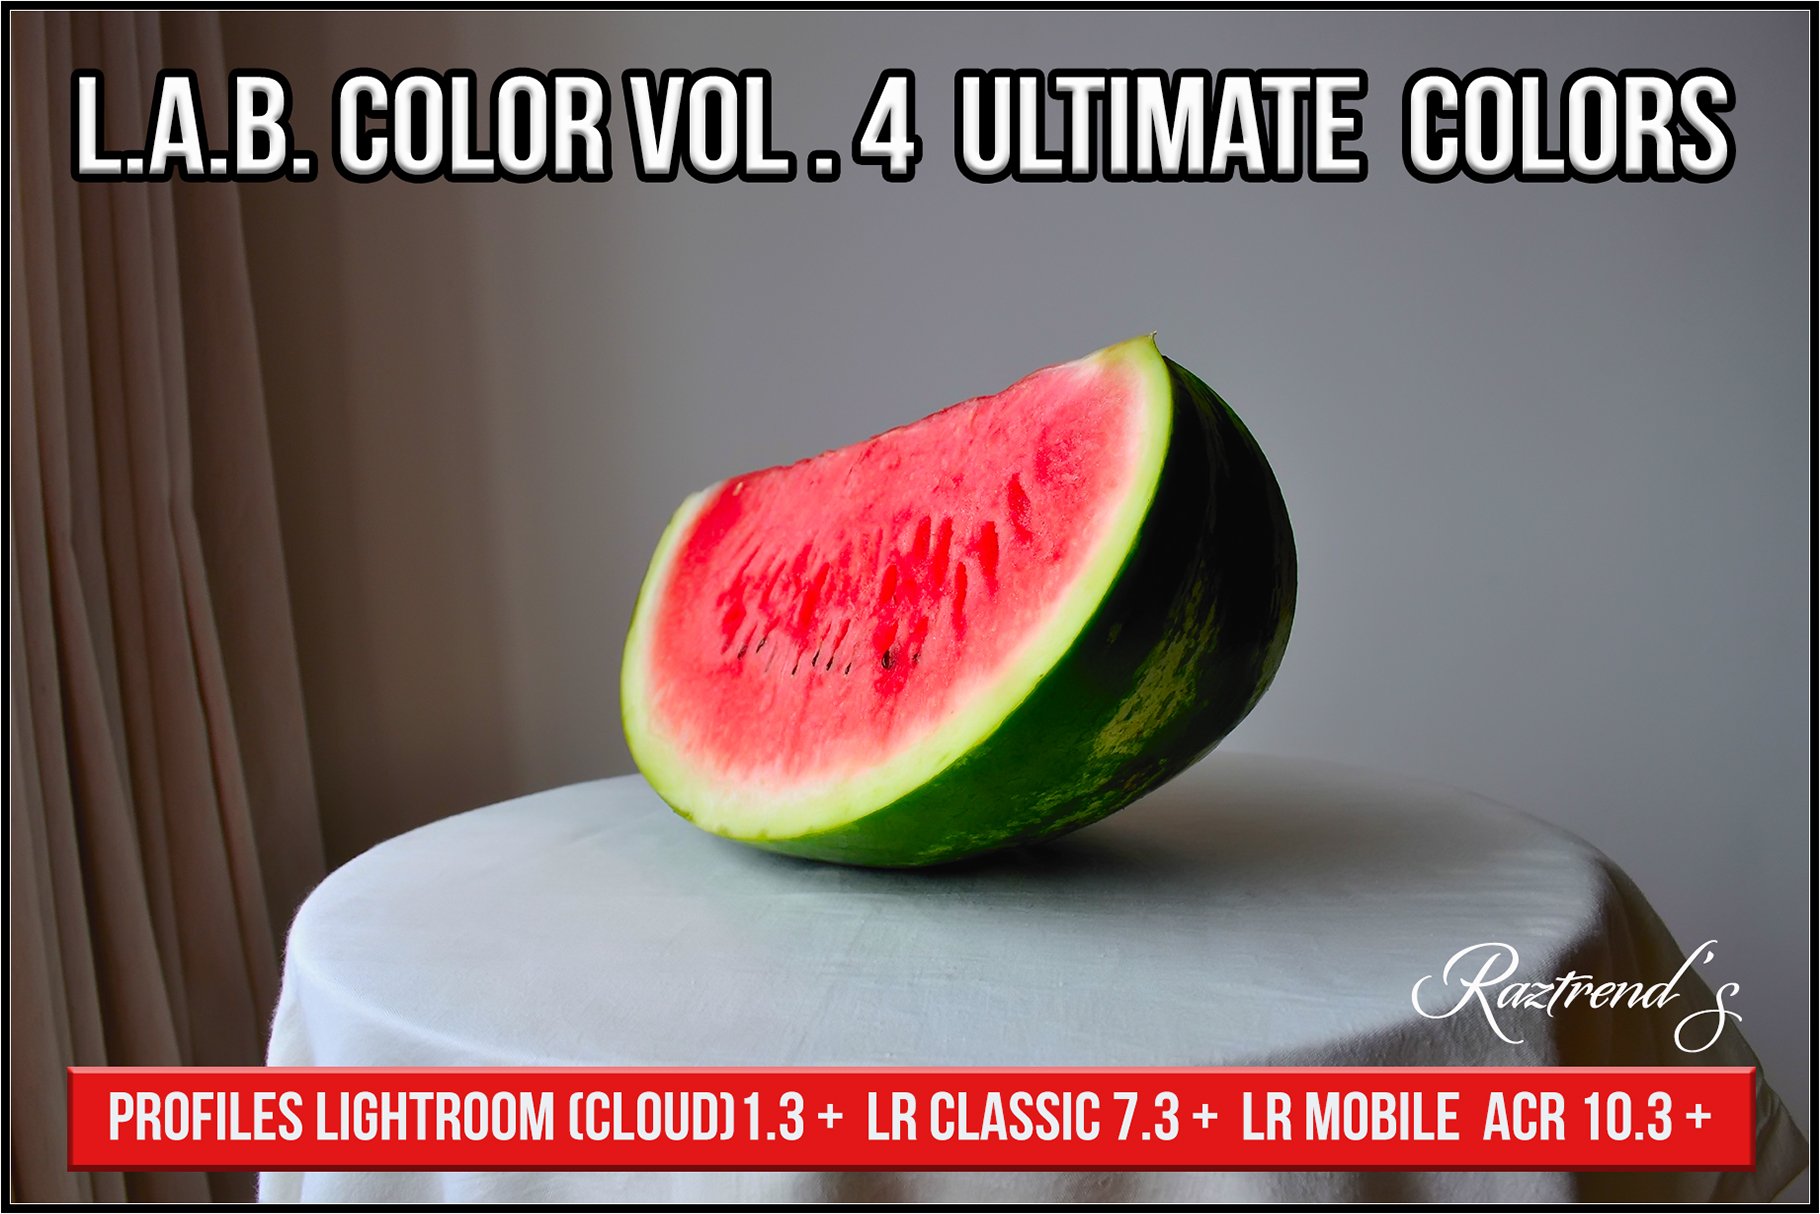 LAB Color Vol. 4 - Ultimate Colorscover image.